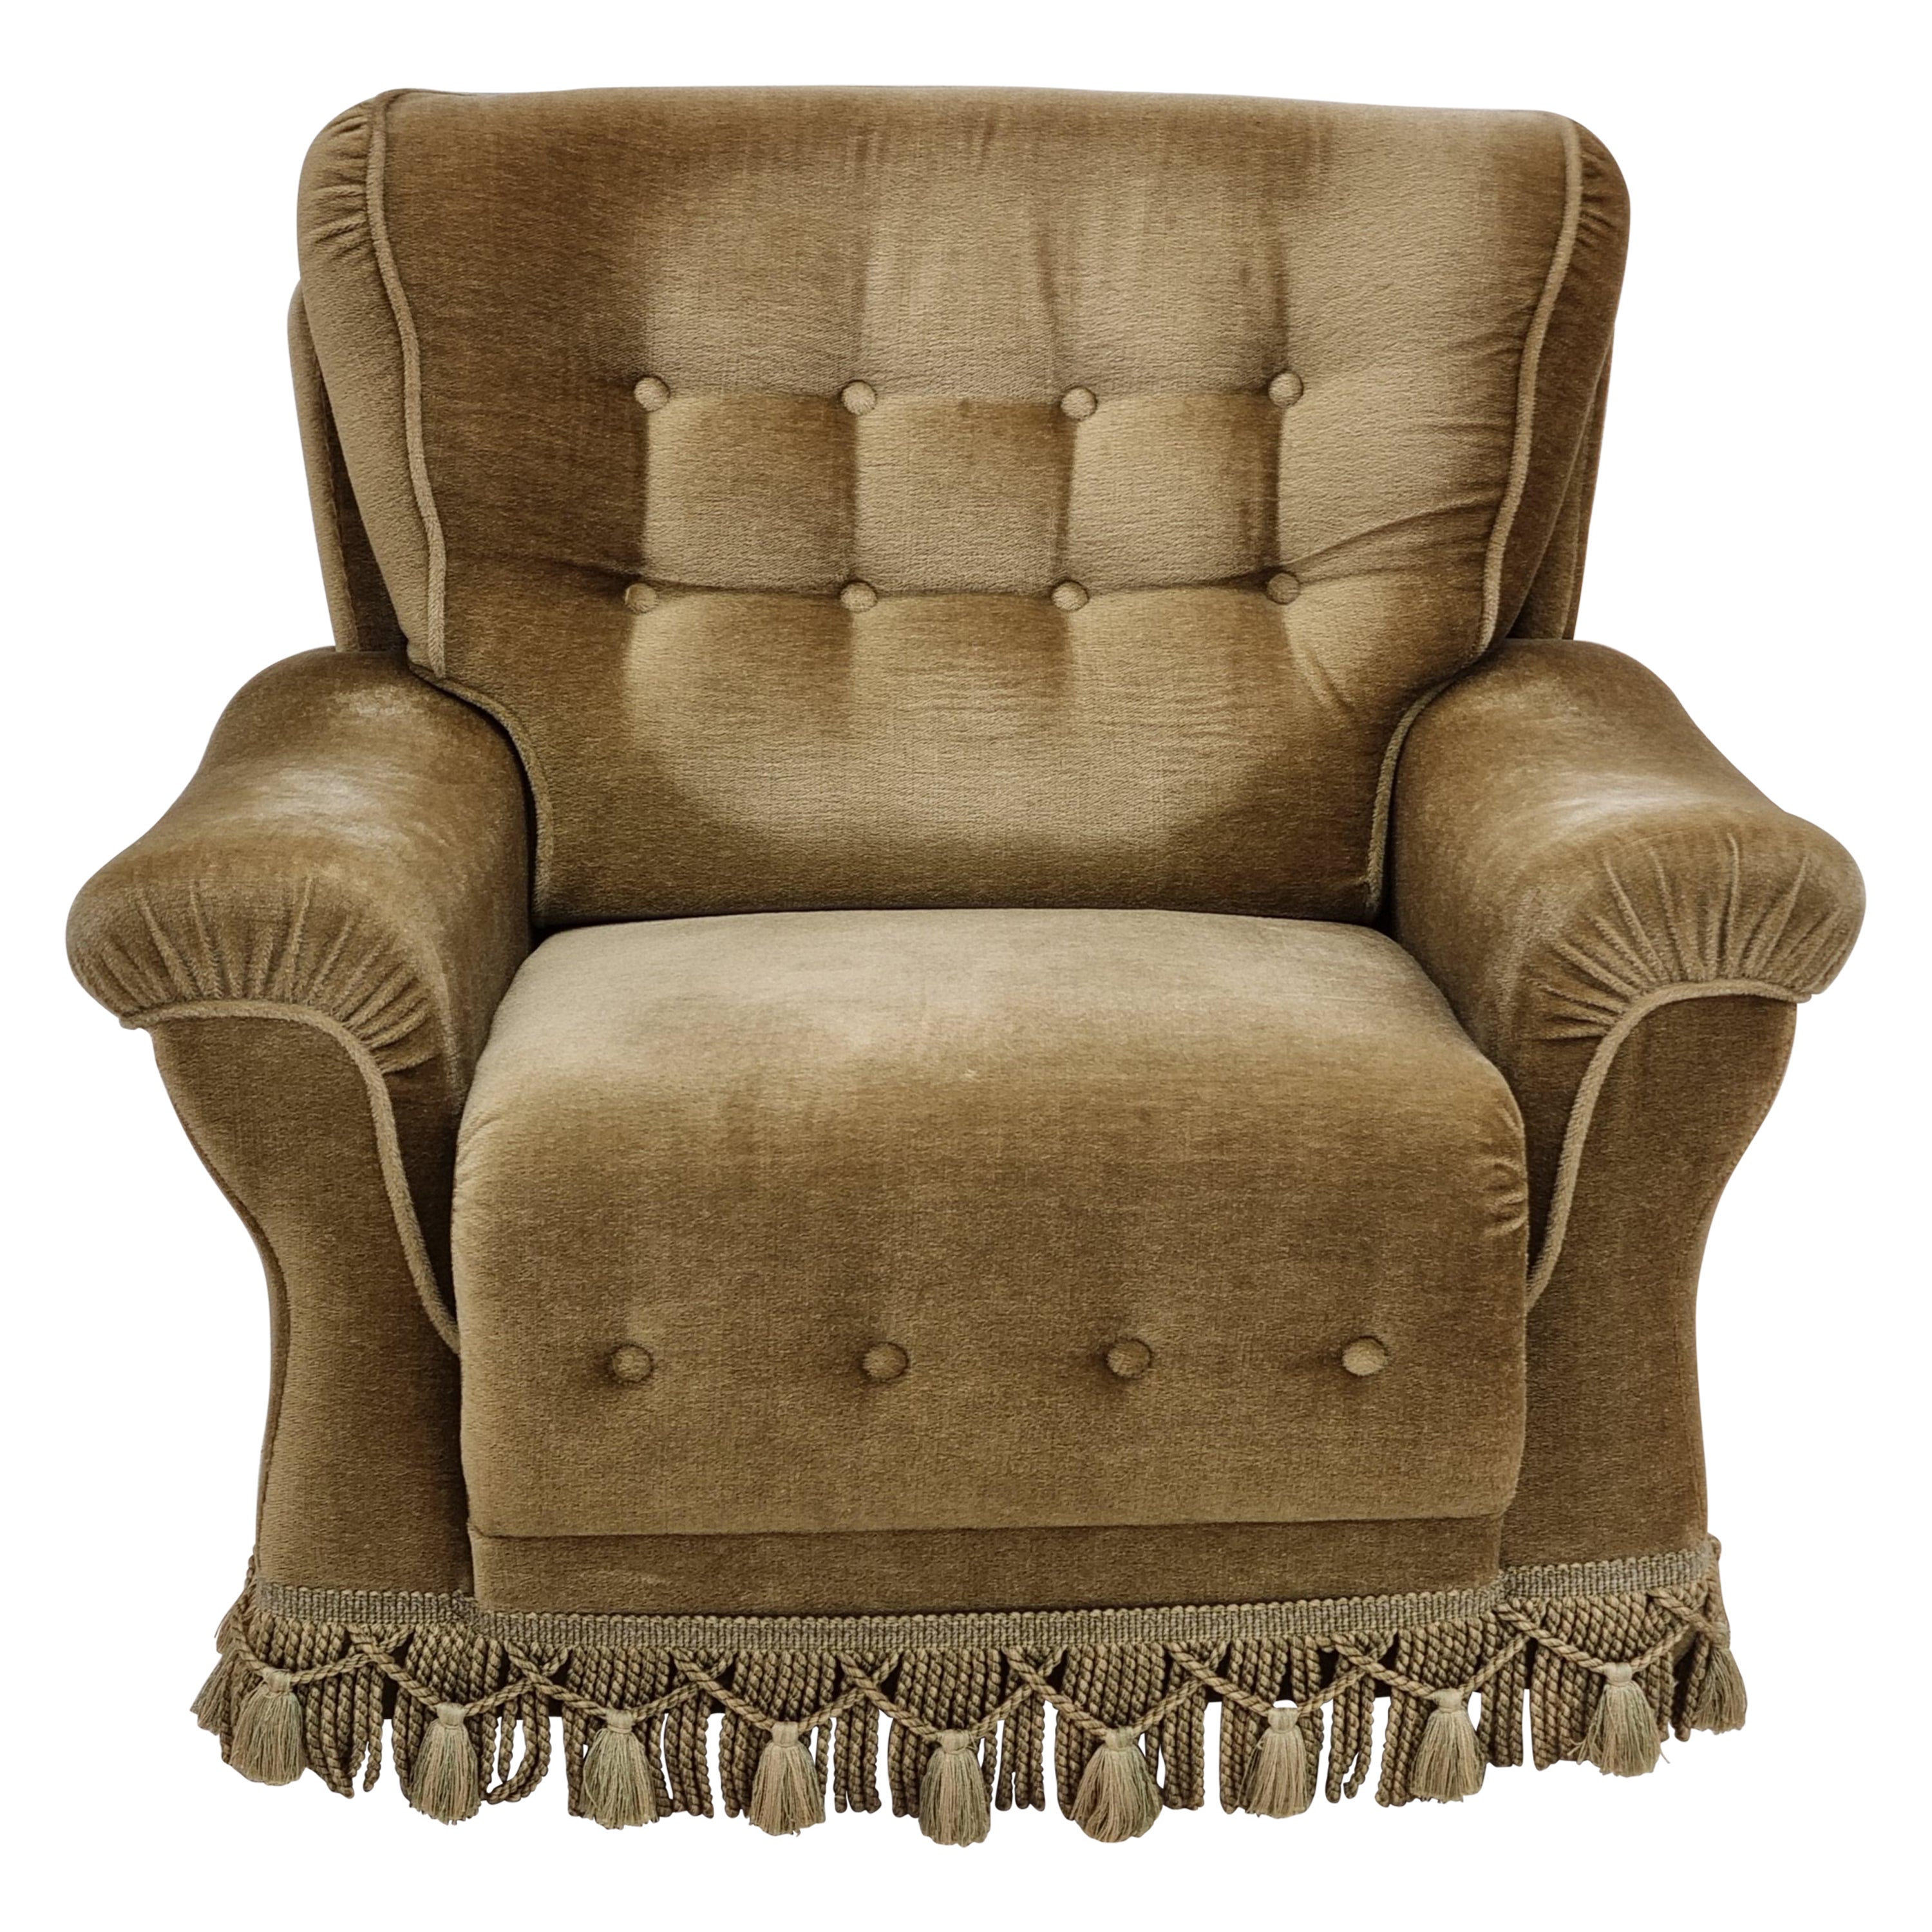 1970s, Danish vintage club chair,  original velour upholstery